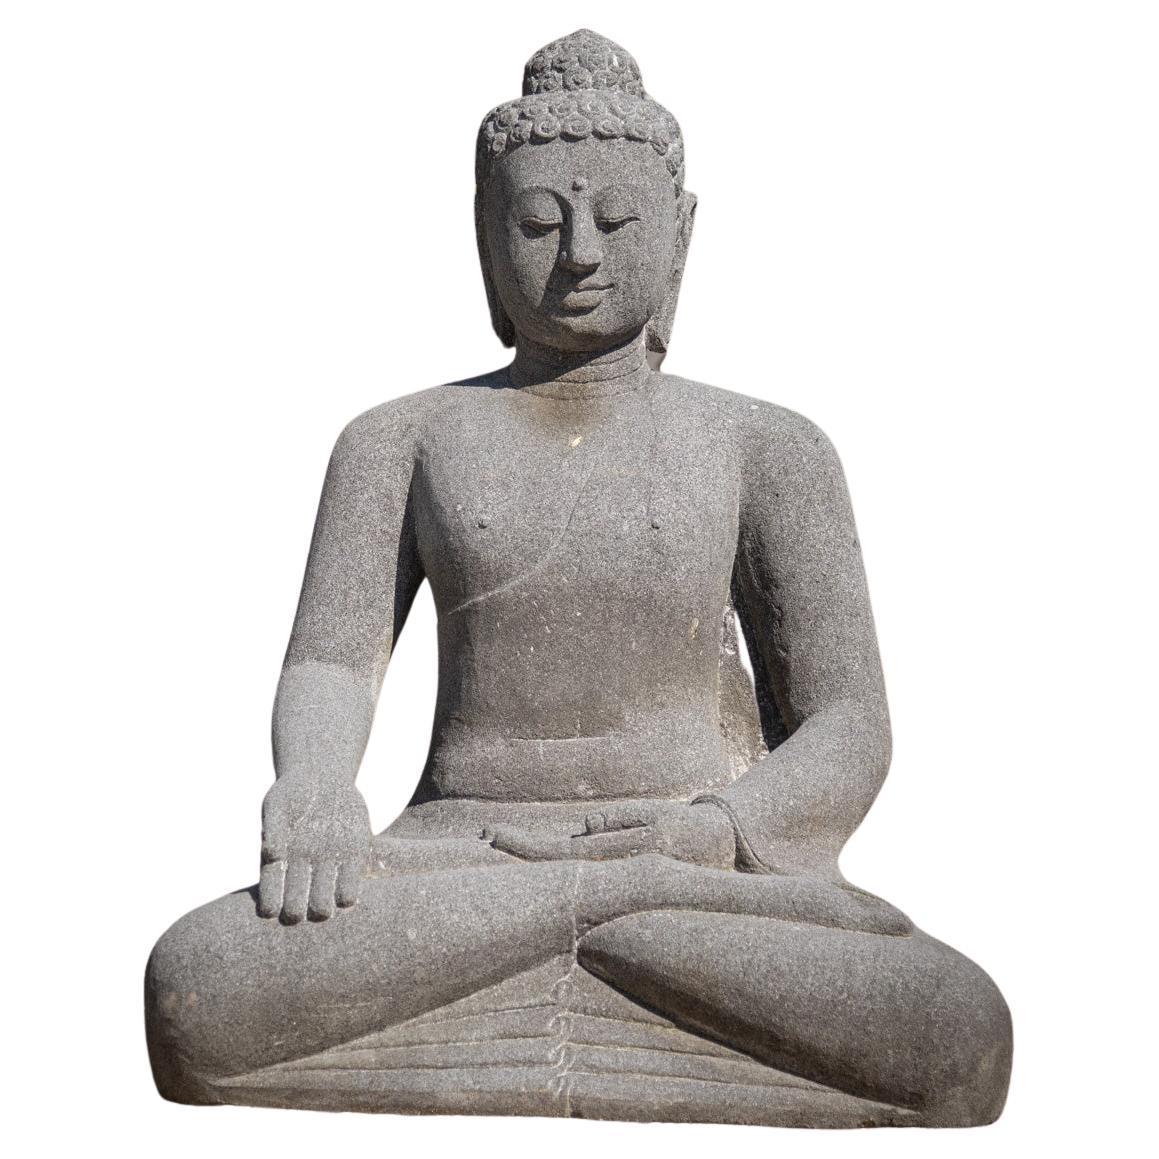 Newly made large lavastone Buddha statue from Indonesia - Original Buddhas For Sale